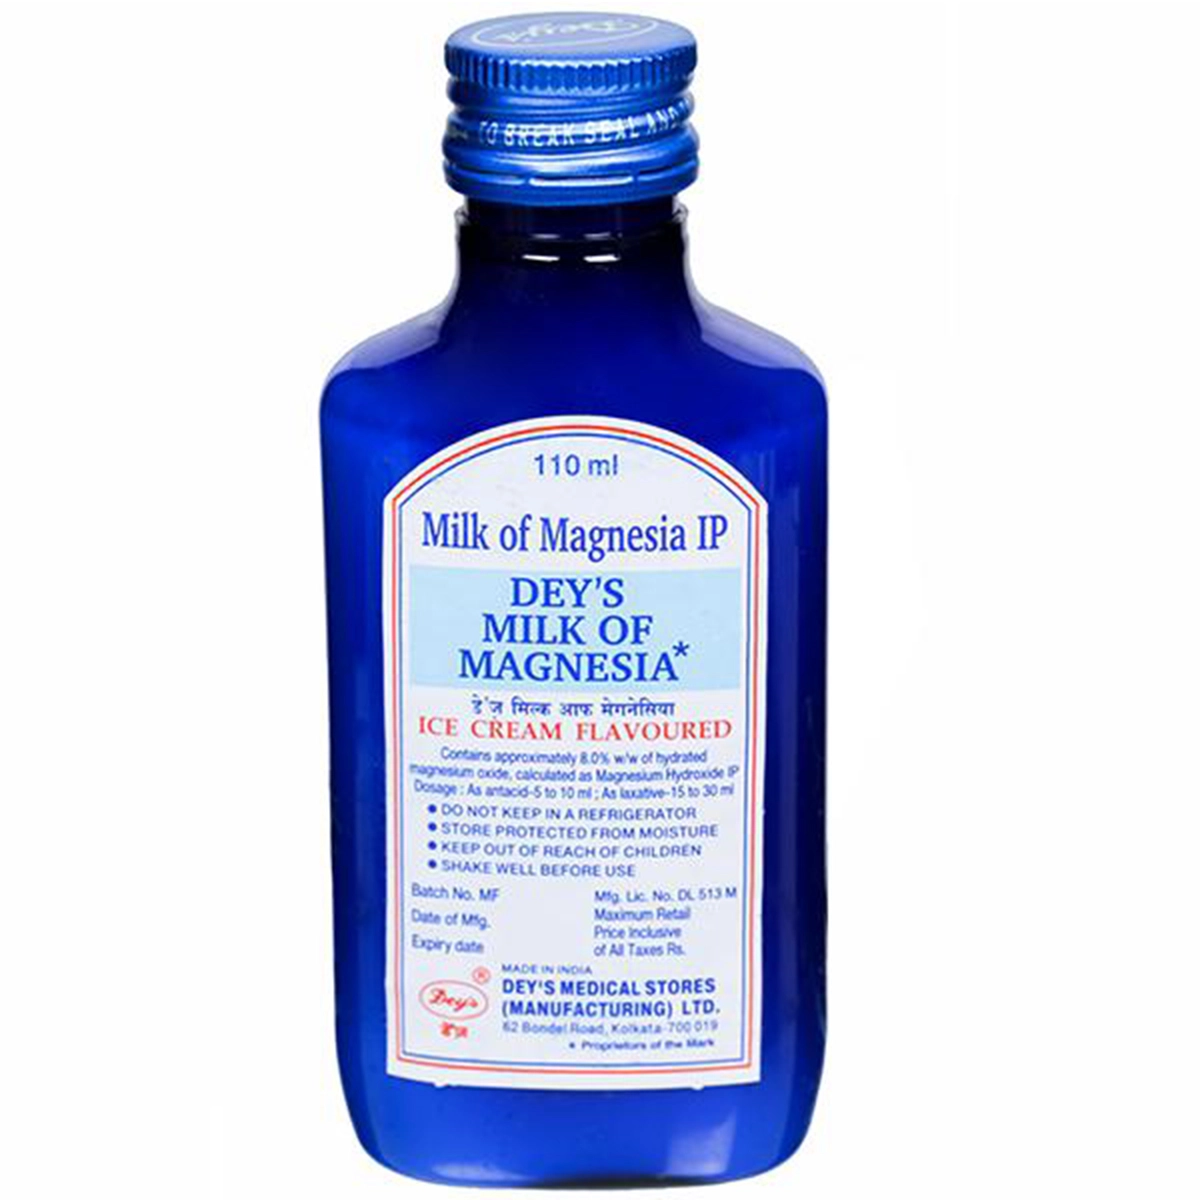 DEY'S MILK OF MAGNESIA Liquid 170ml - Buy Medicines online at Best Price  from